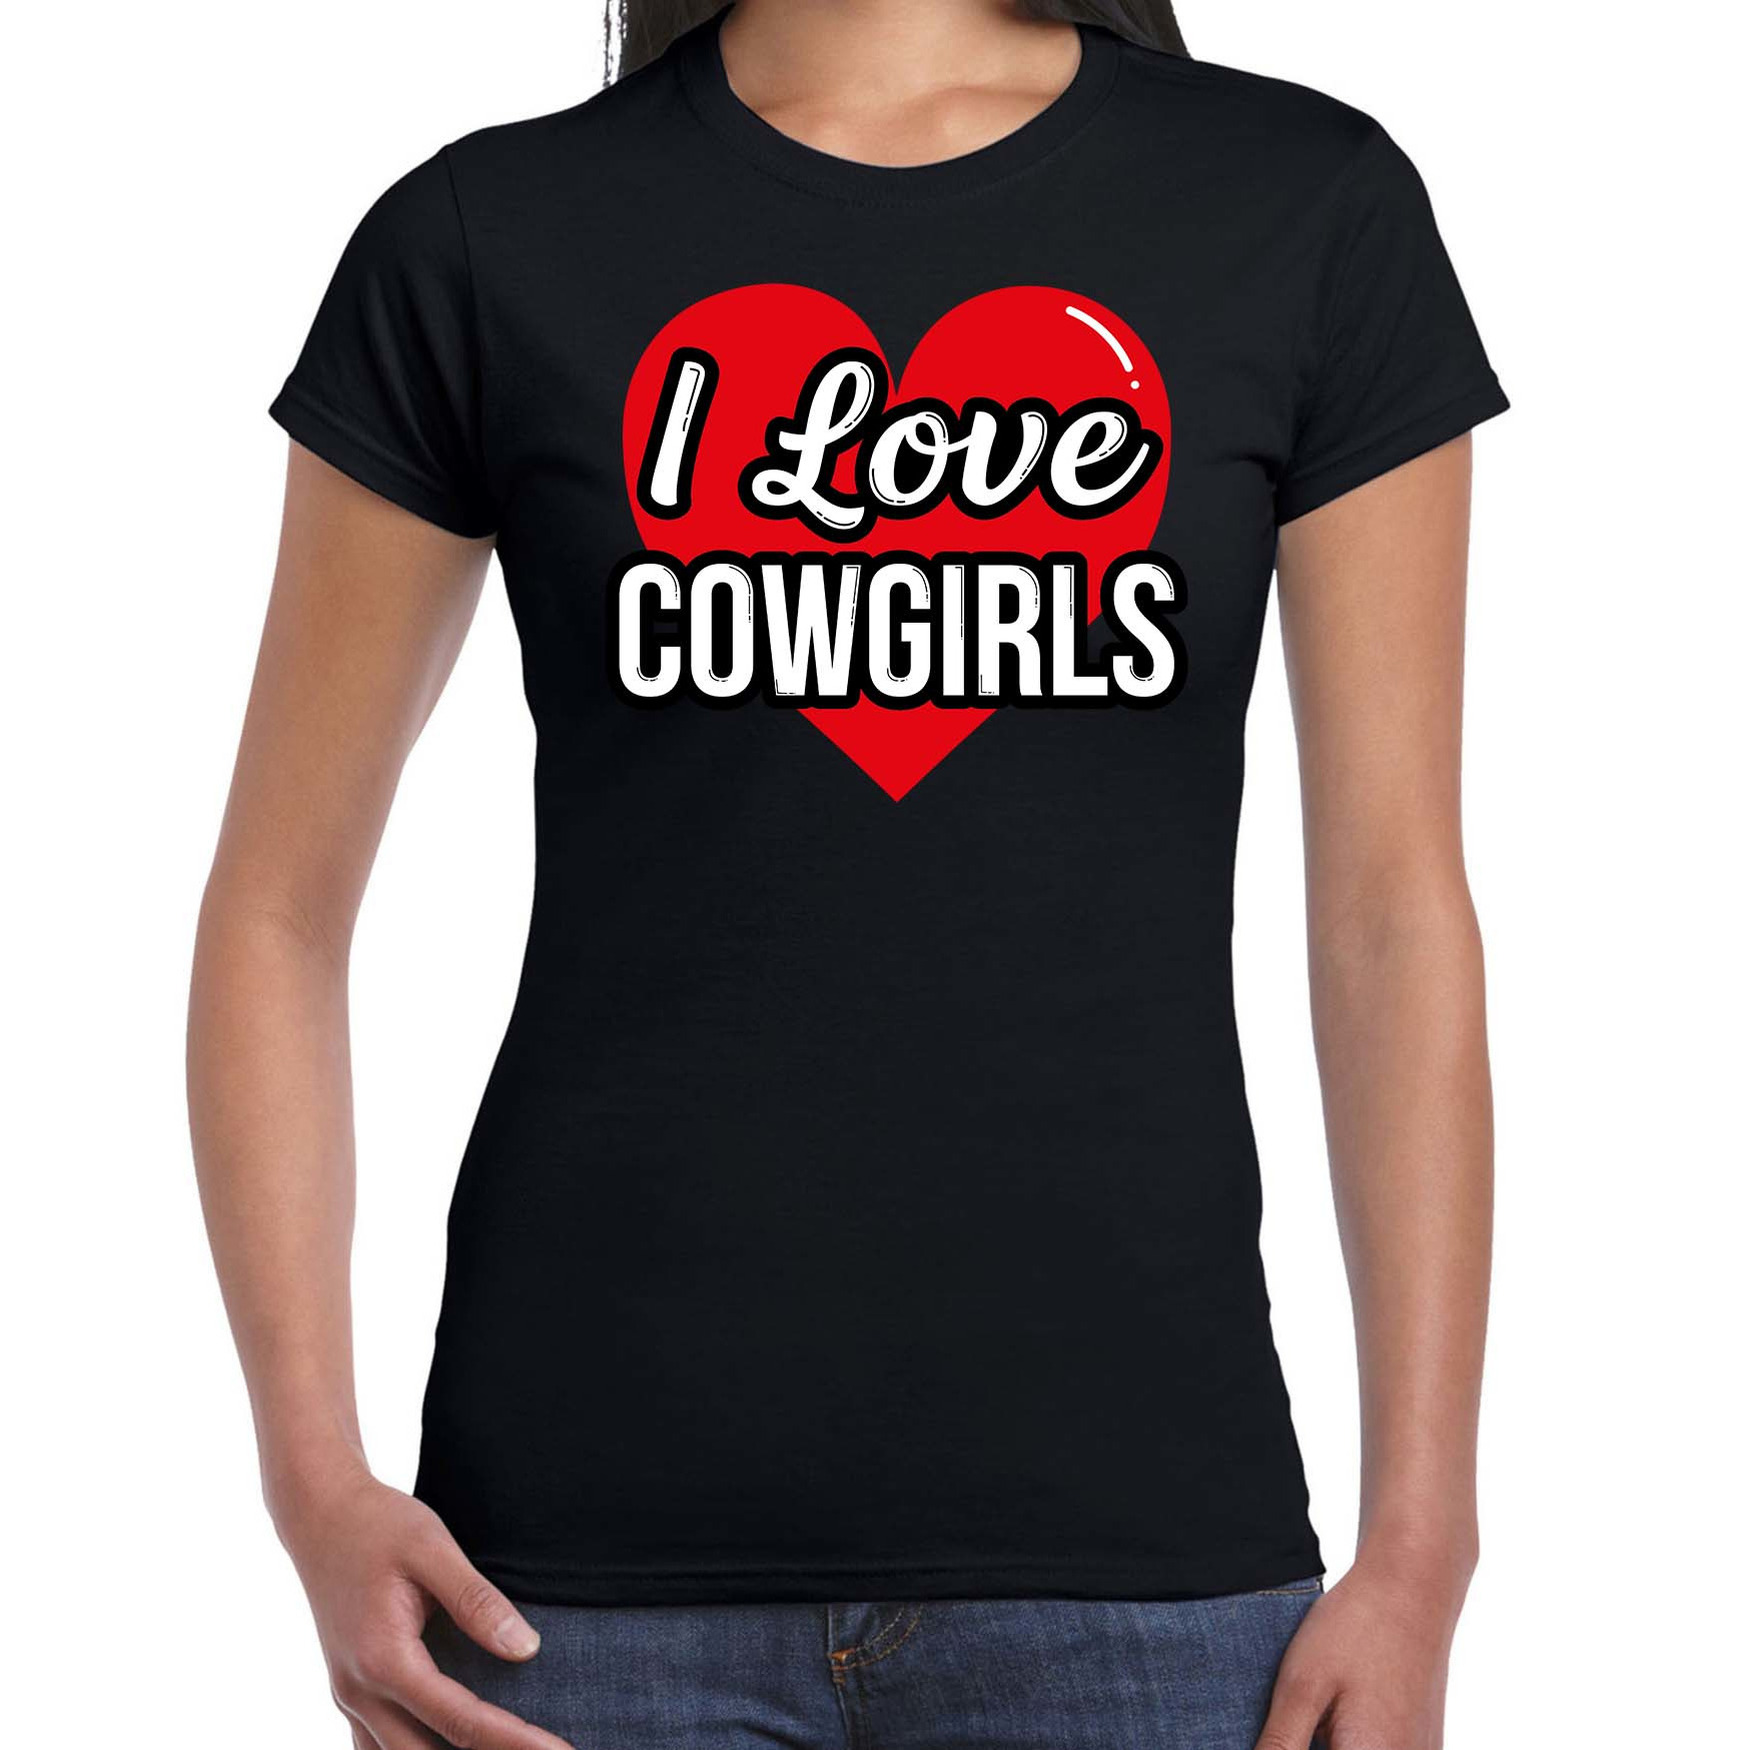 I love Cowgirls verkleed t-shirt zwart voor dames Outfit western verkleed feest